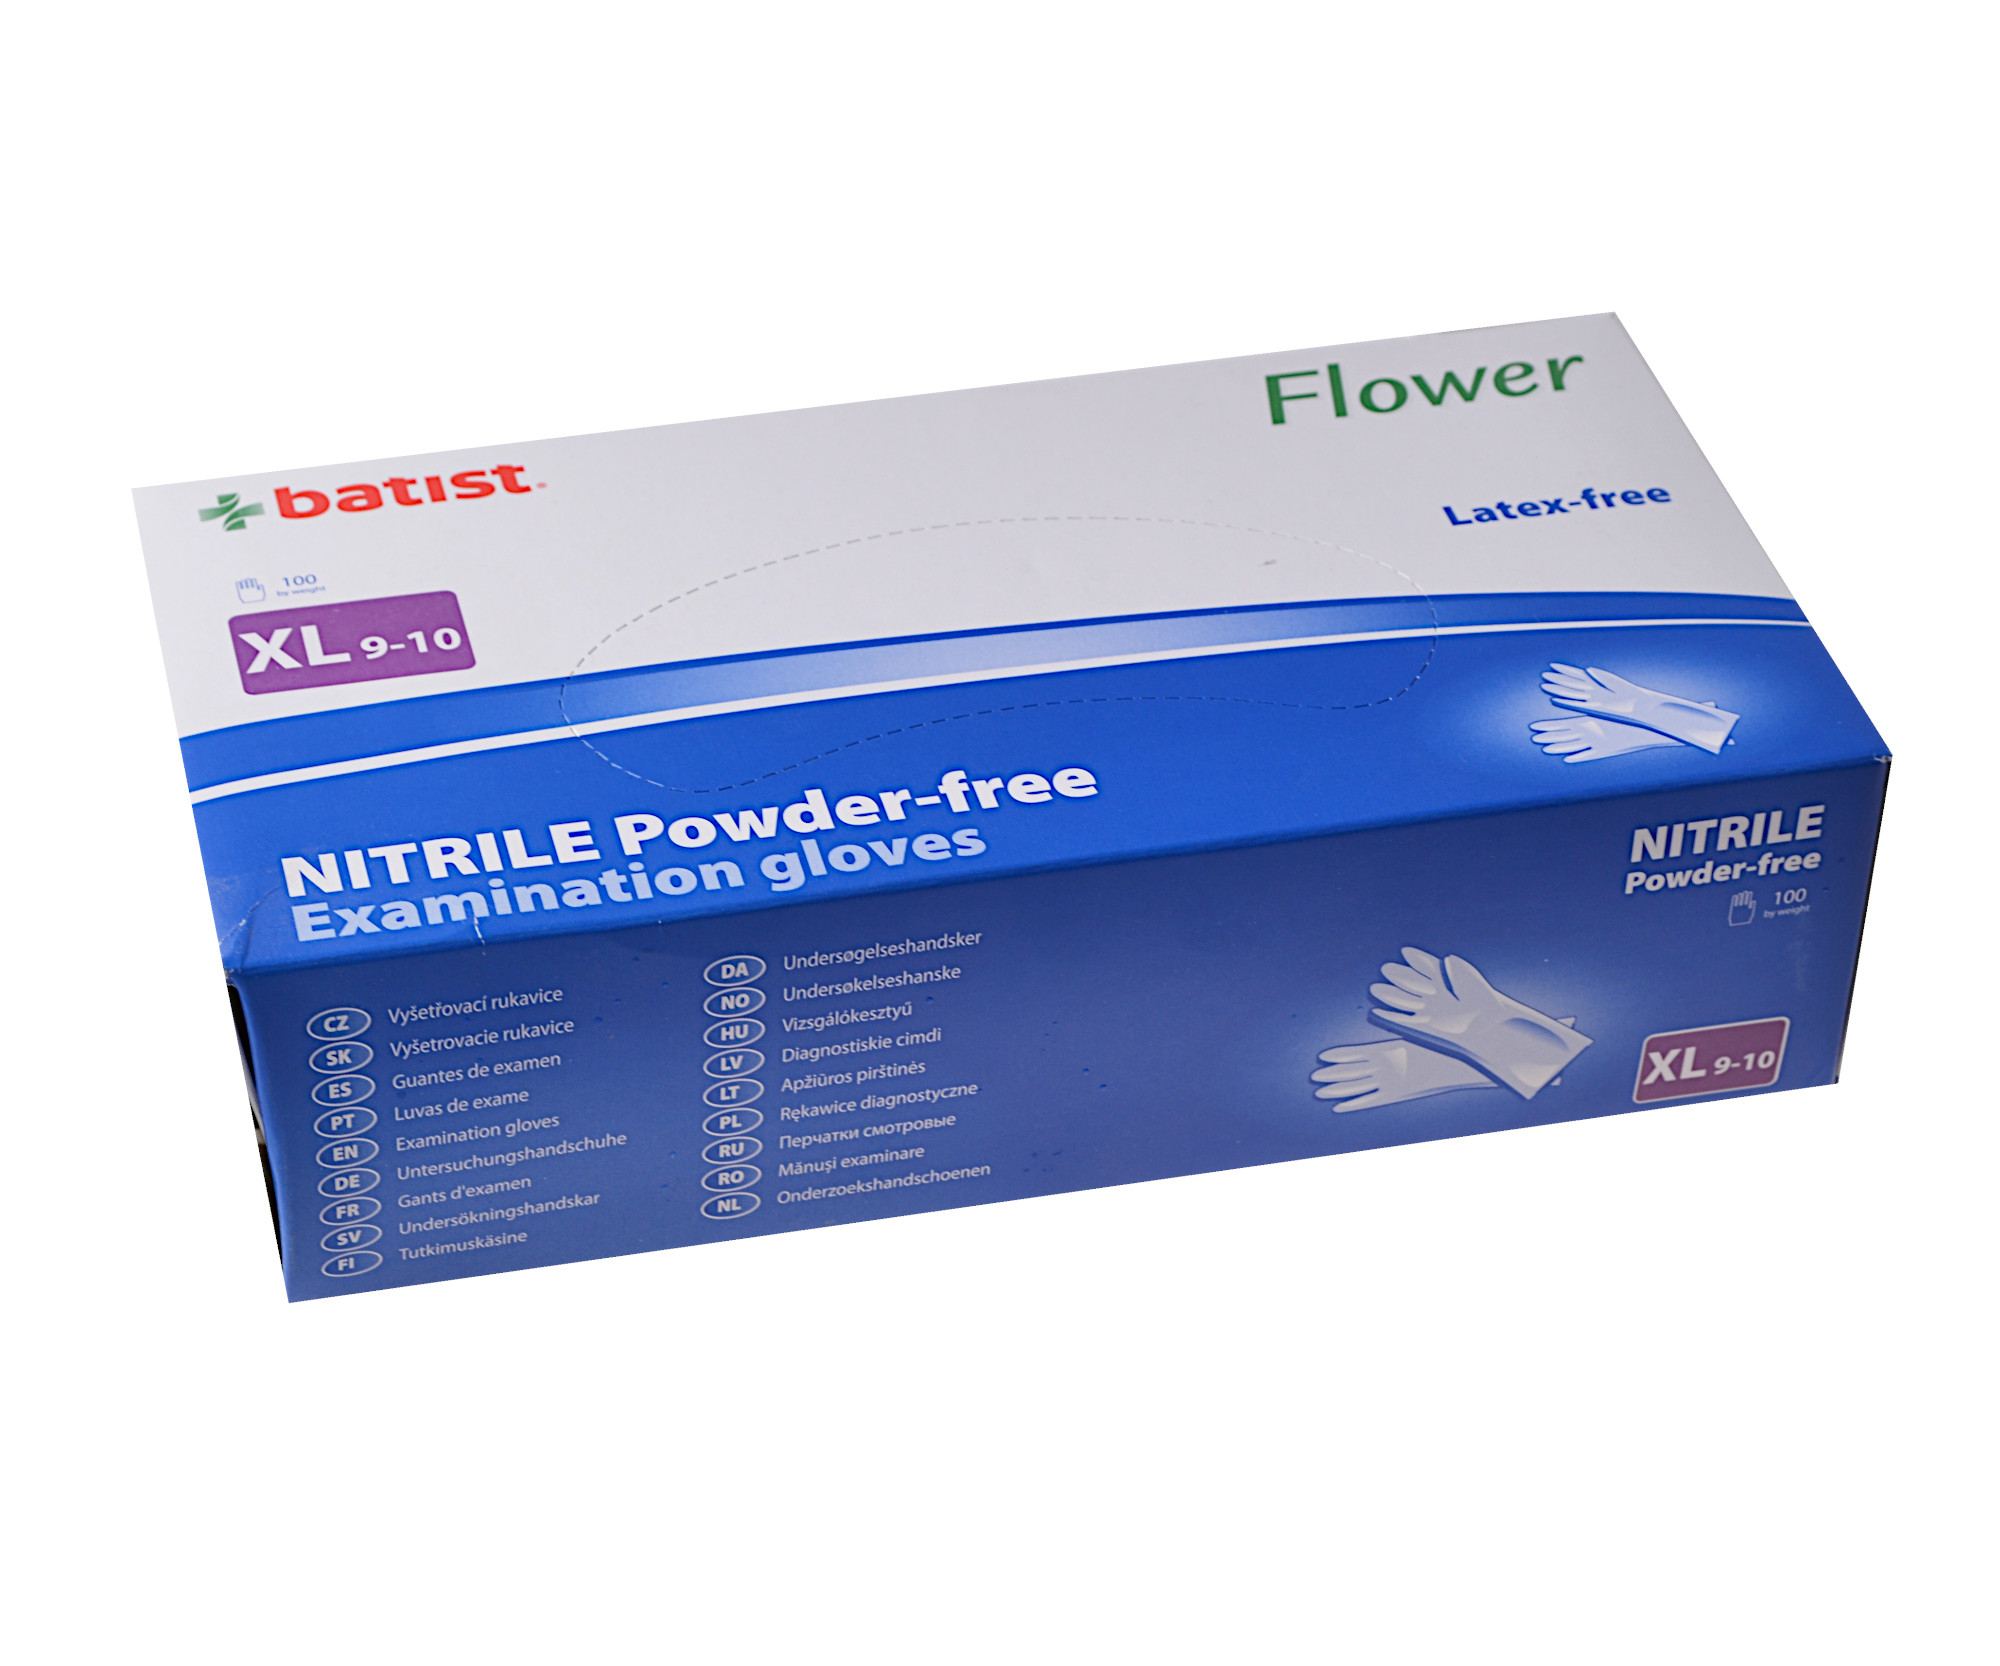 Jednorázové nitrilové rukavice Batist Flower Premium 100 ks - XL (1323805899) + DÁREK ZDARMA